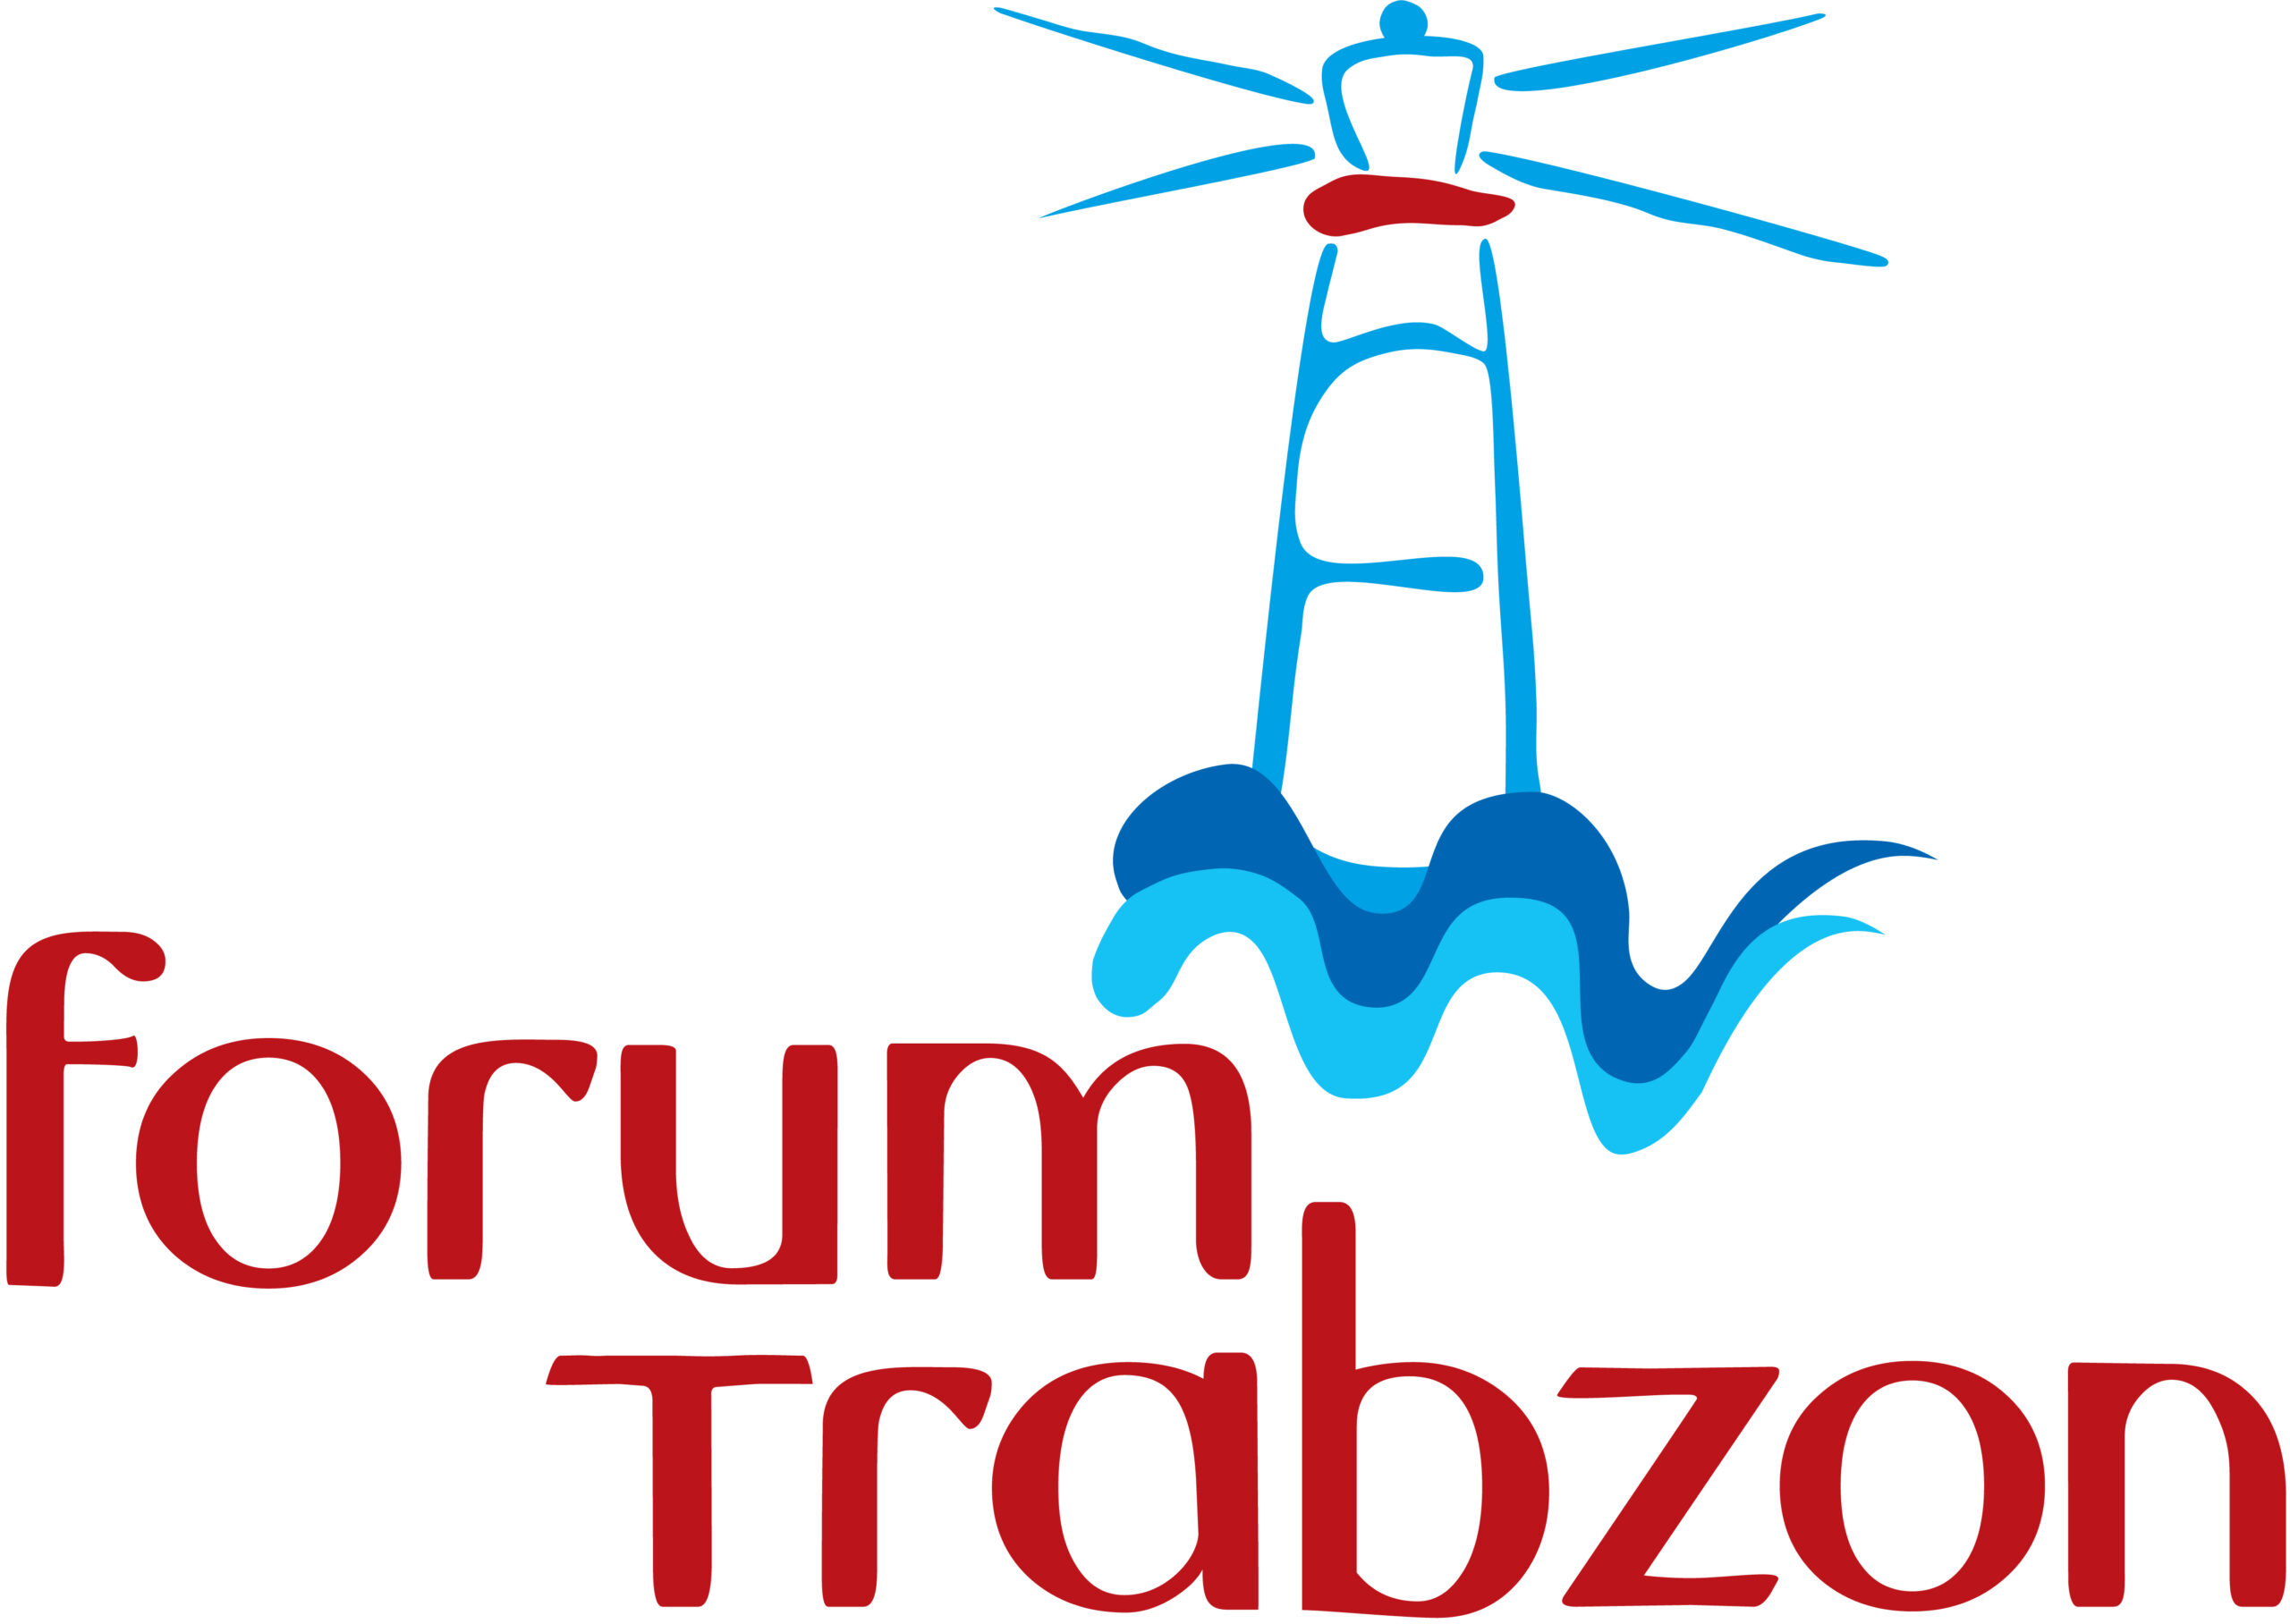 Forum Trabzon